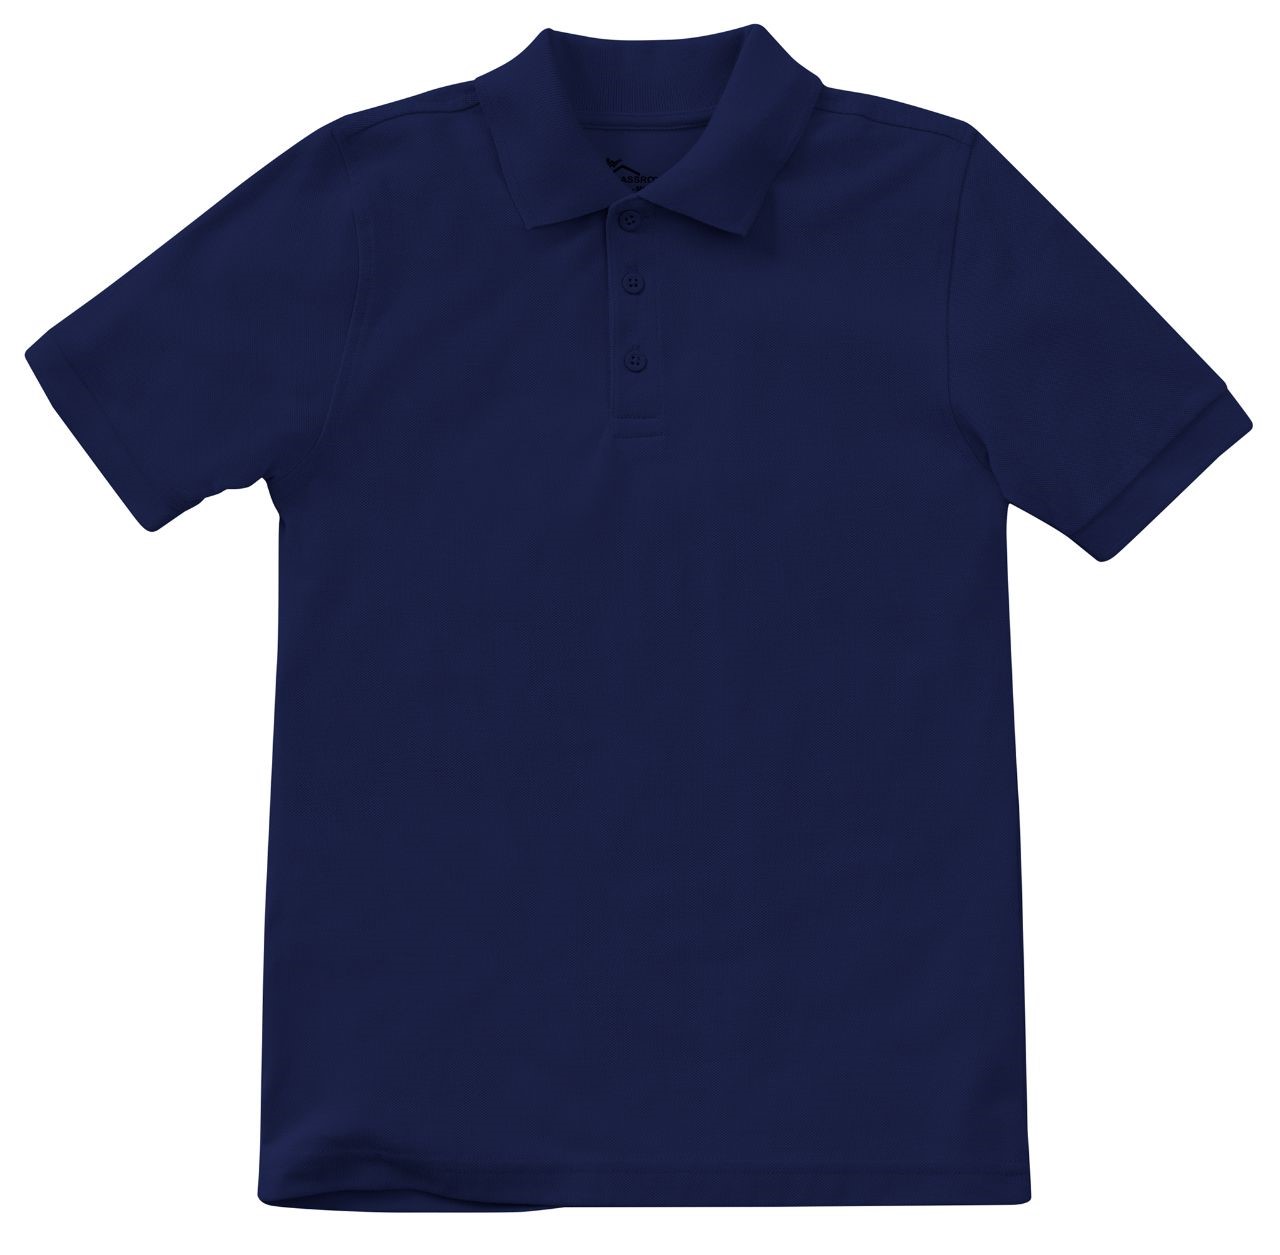 RG-Adult short sleeve polo shirt with logo